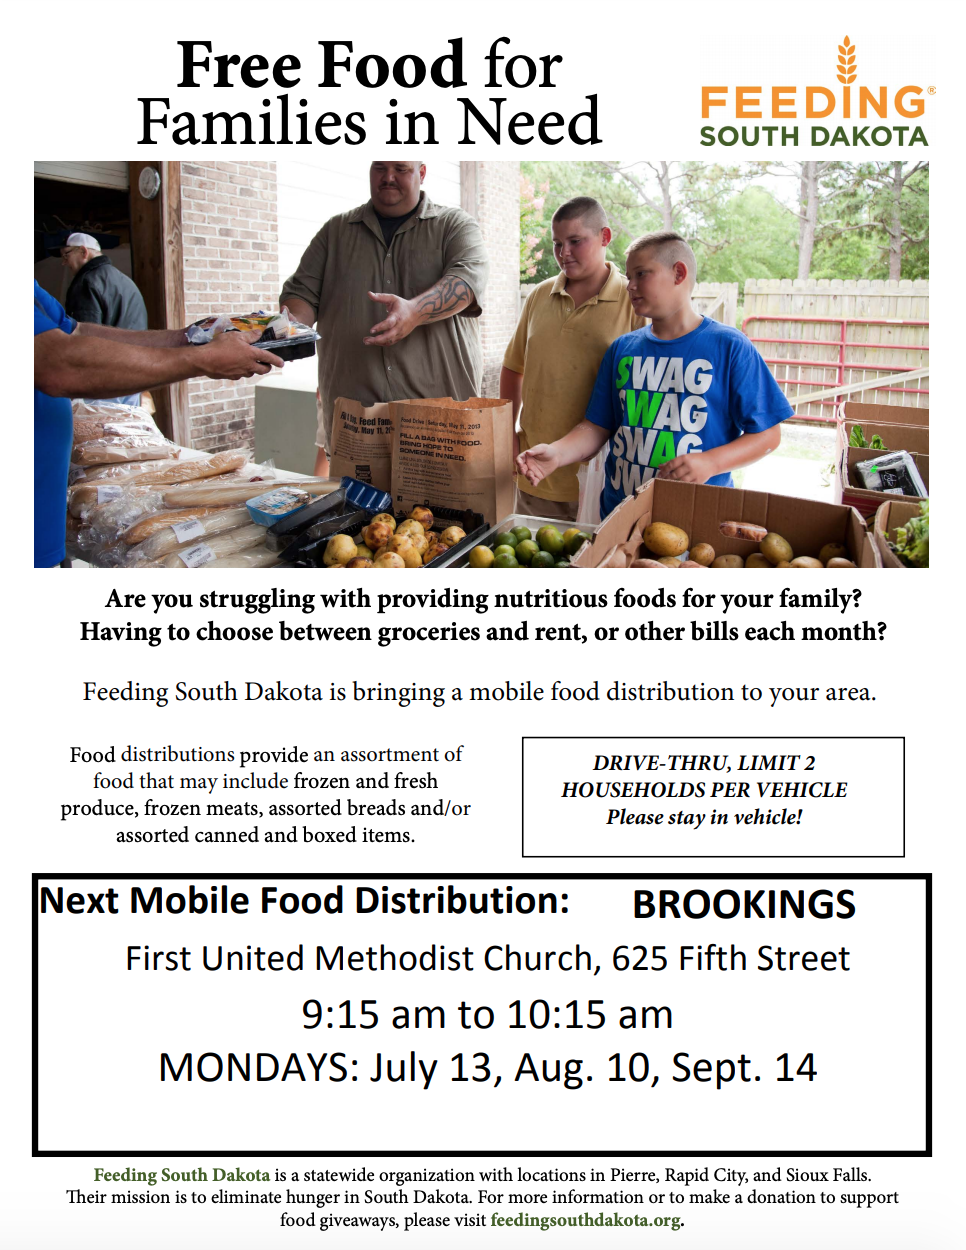 Feeding South Dakota Mobile Food Distribution Brookings United Way